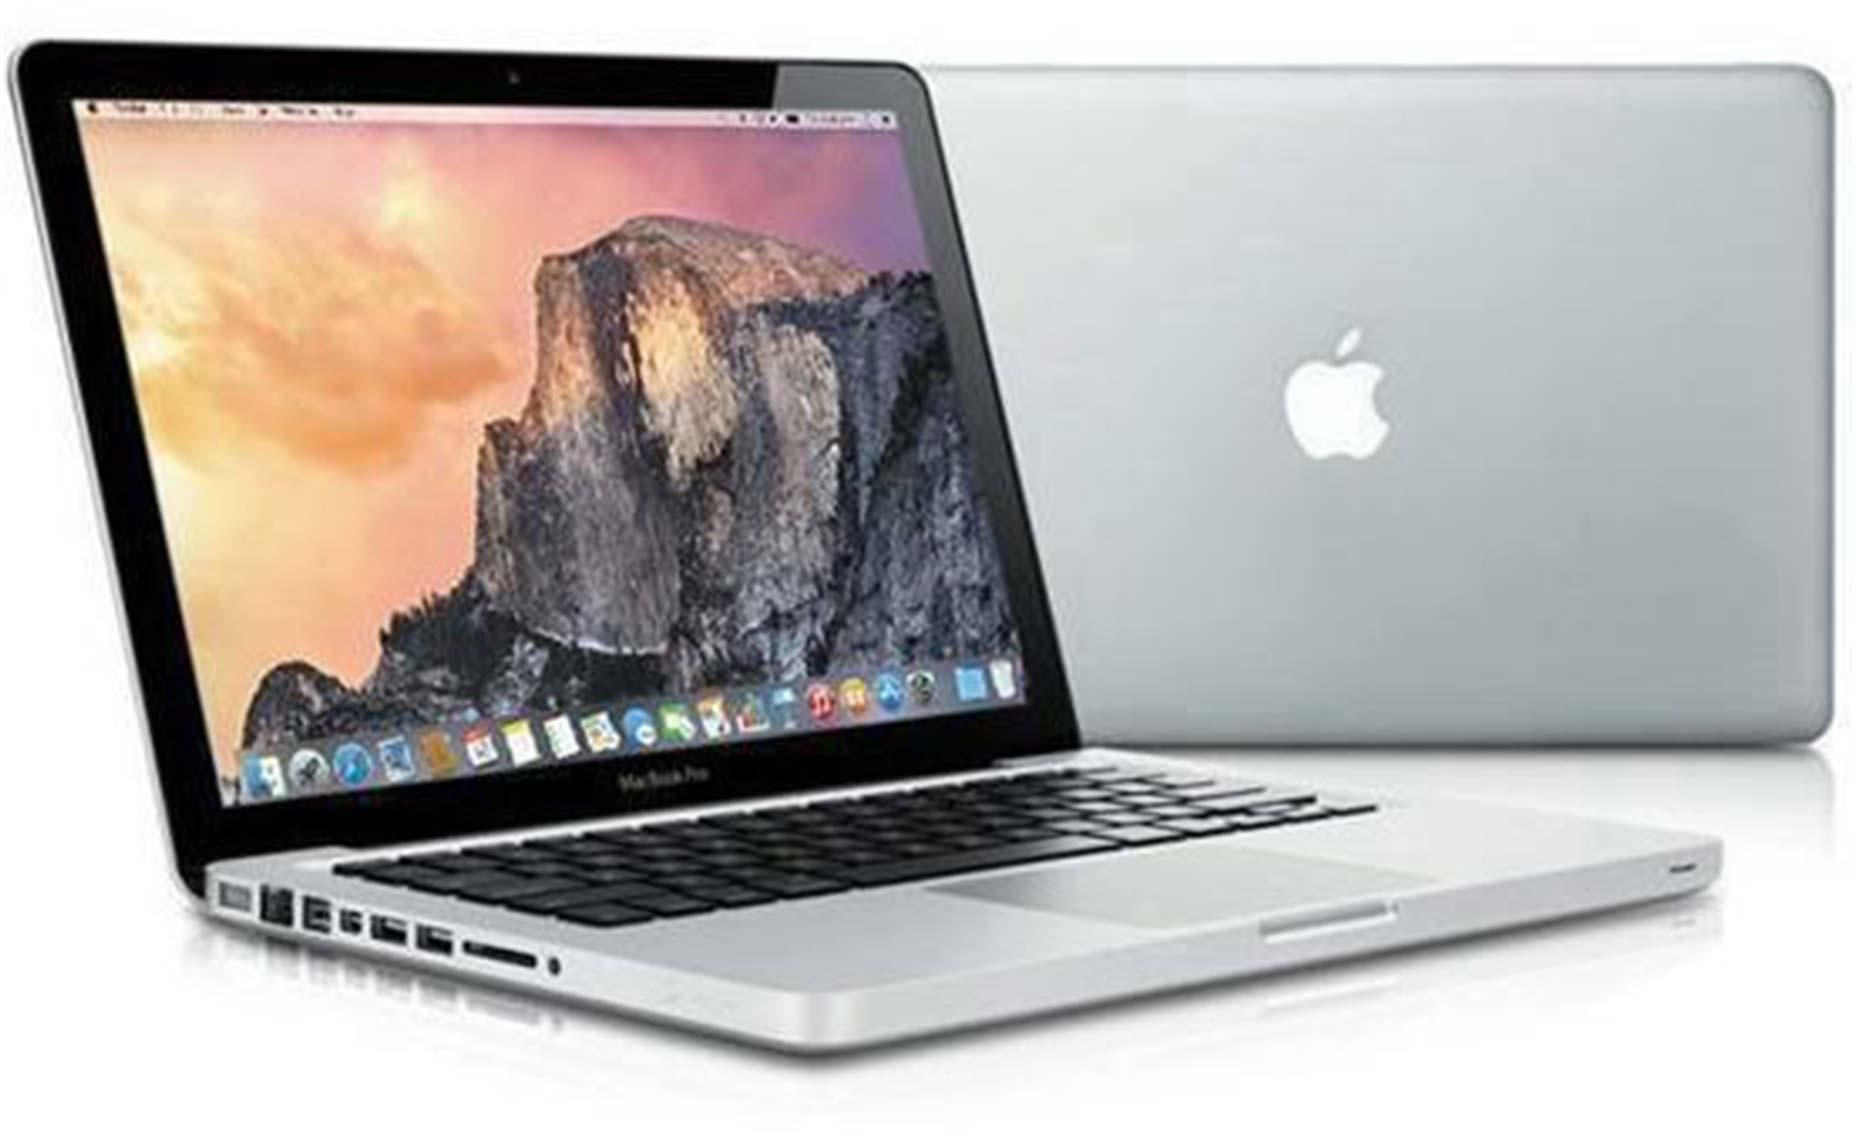 Apple MacBook Pro 13" (Mid 2012) - Core i5 2.5GHz, 4GB RAM, 500GB HDD